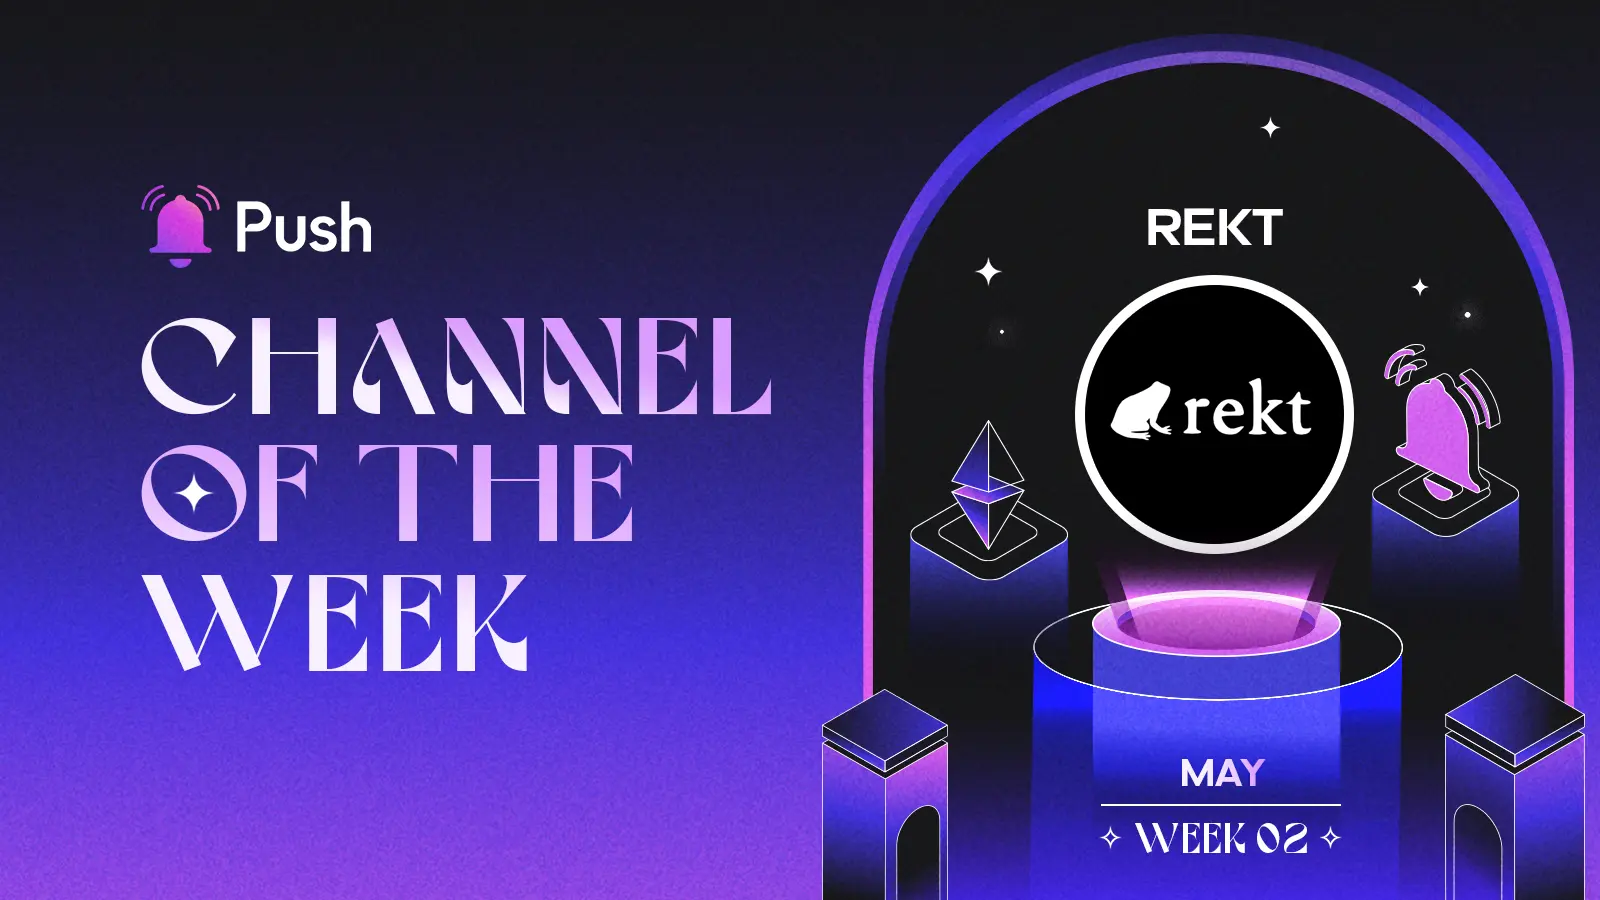 Banner celebrating Rekt as May - week 2 channel of week